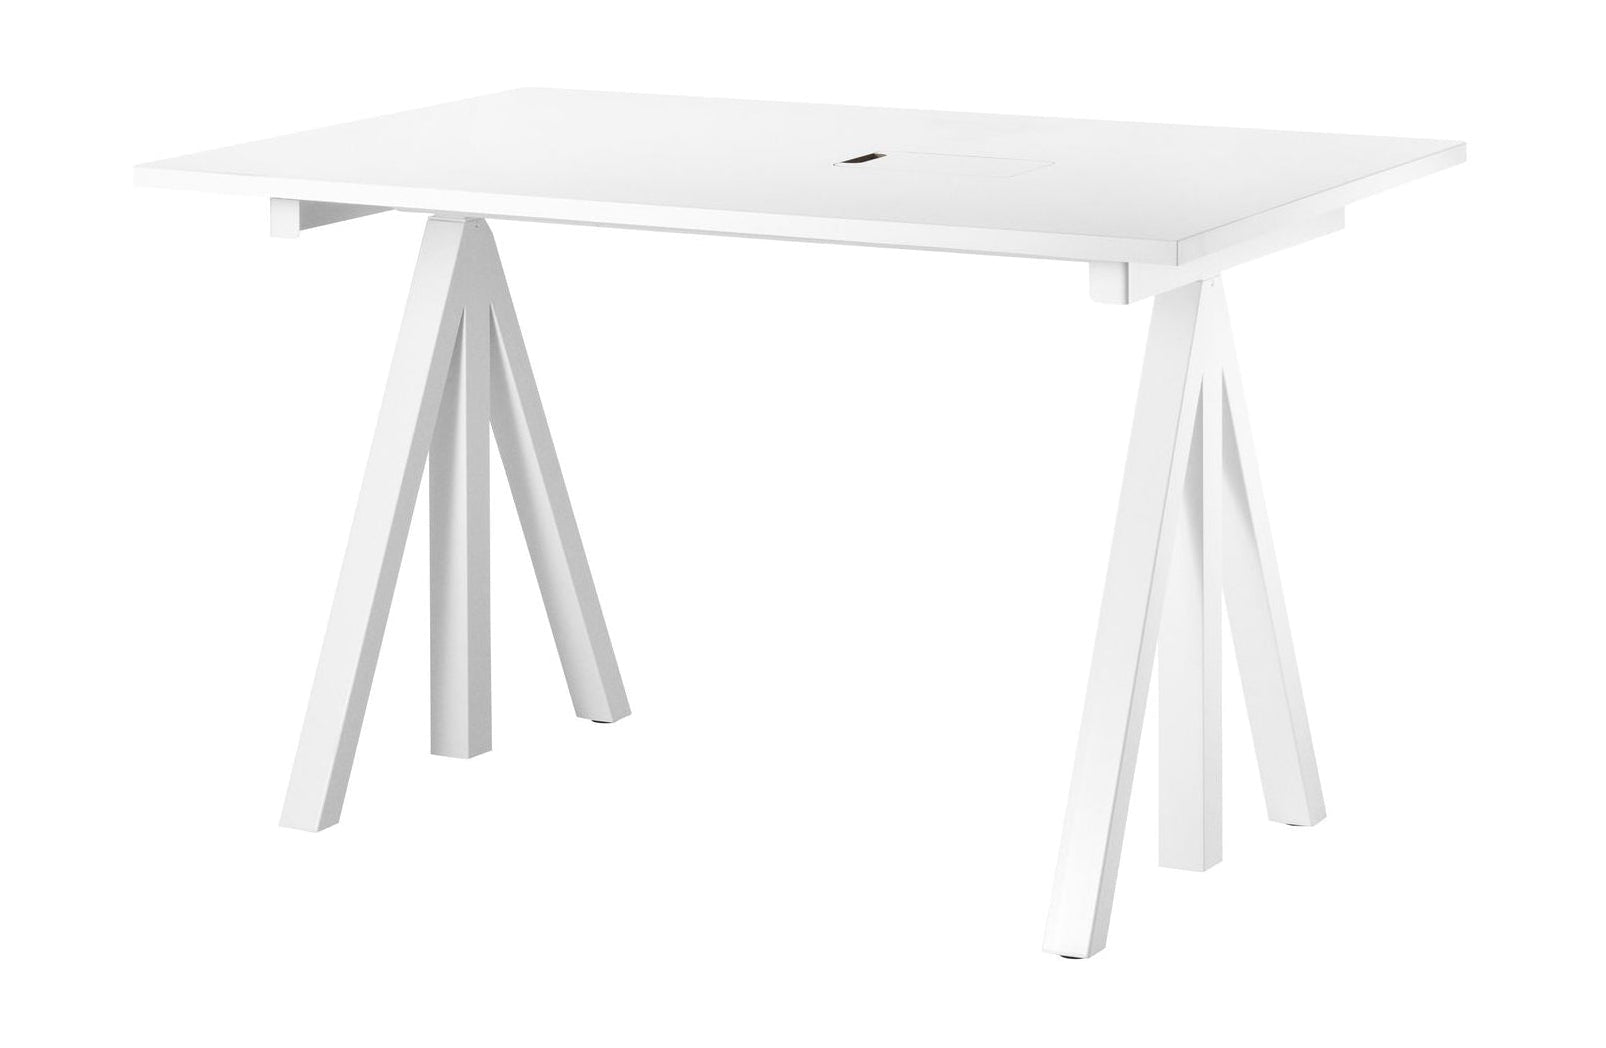 String Furniture Works Work Table 78x120 Cm, White Laminate